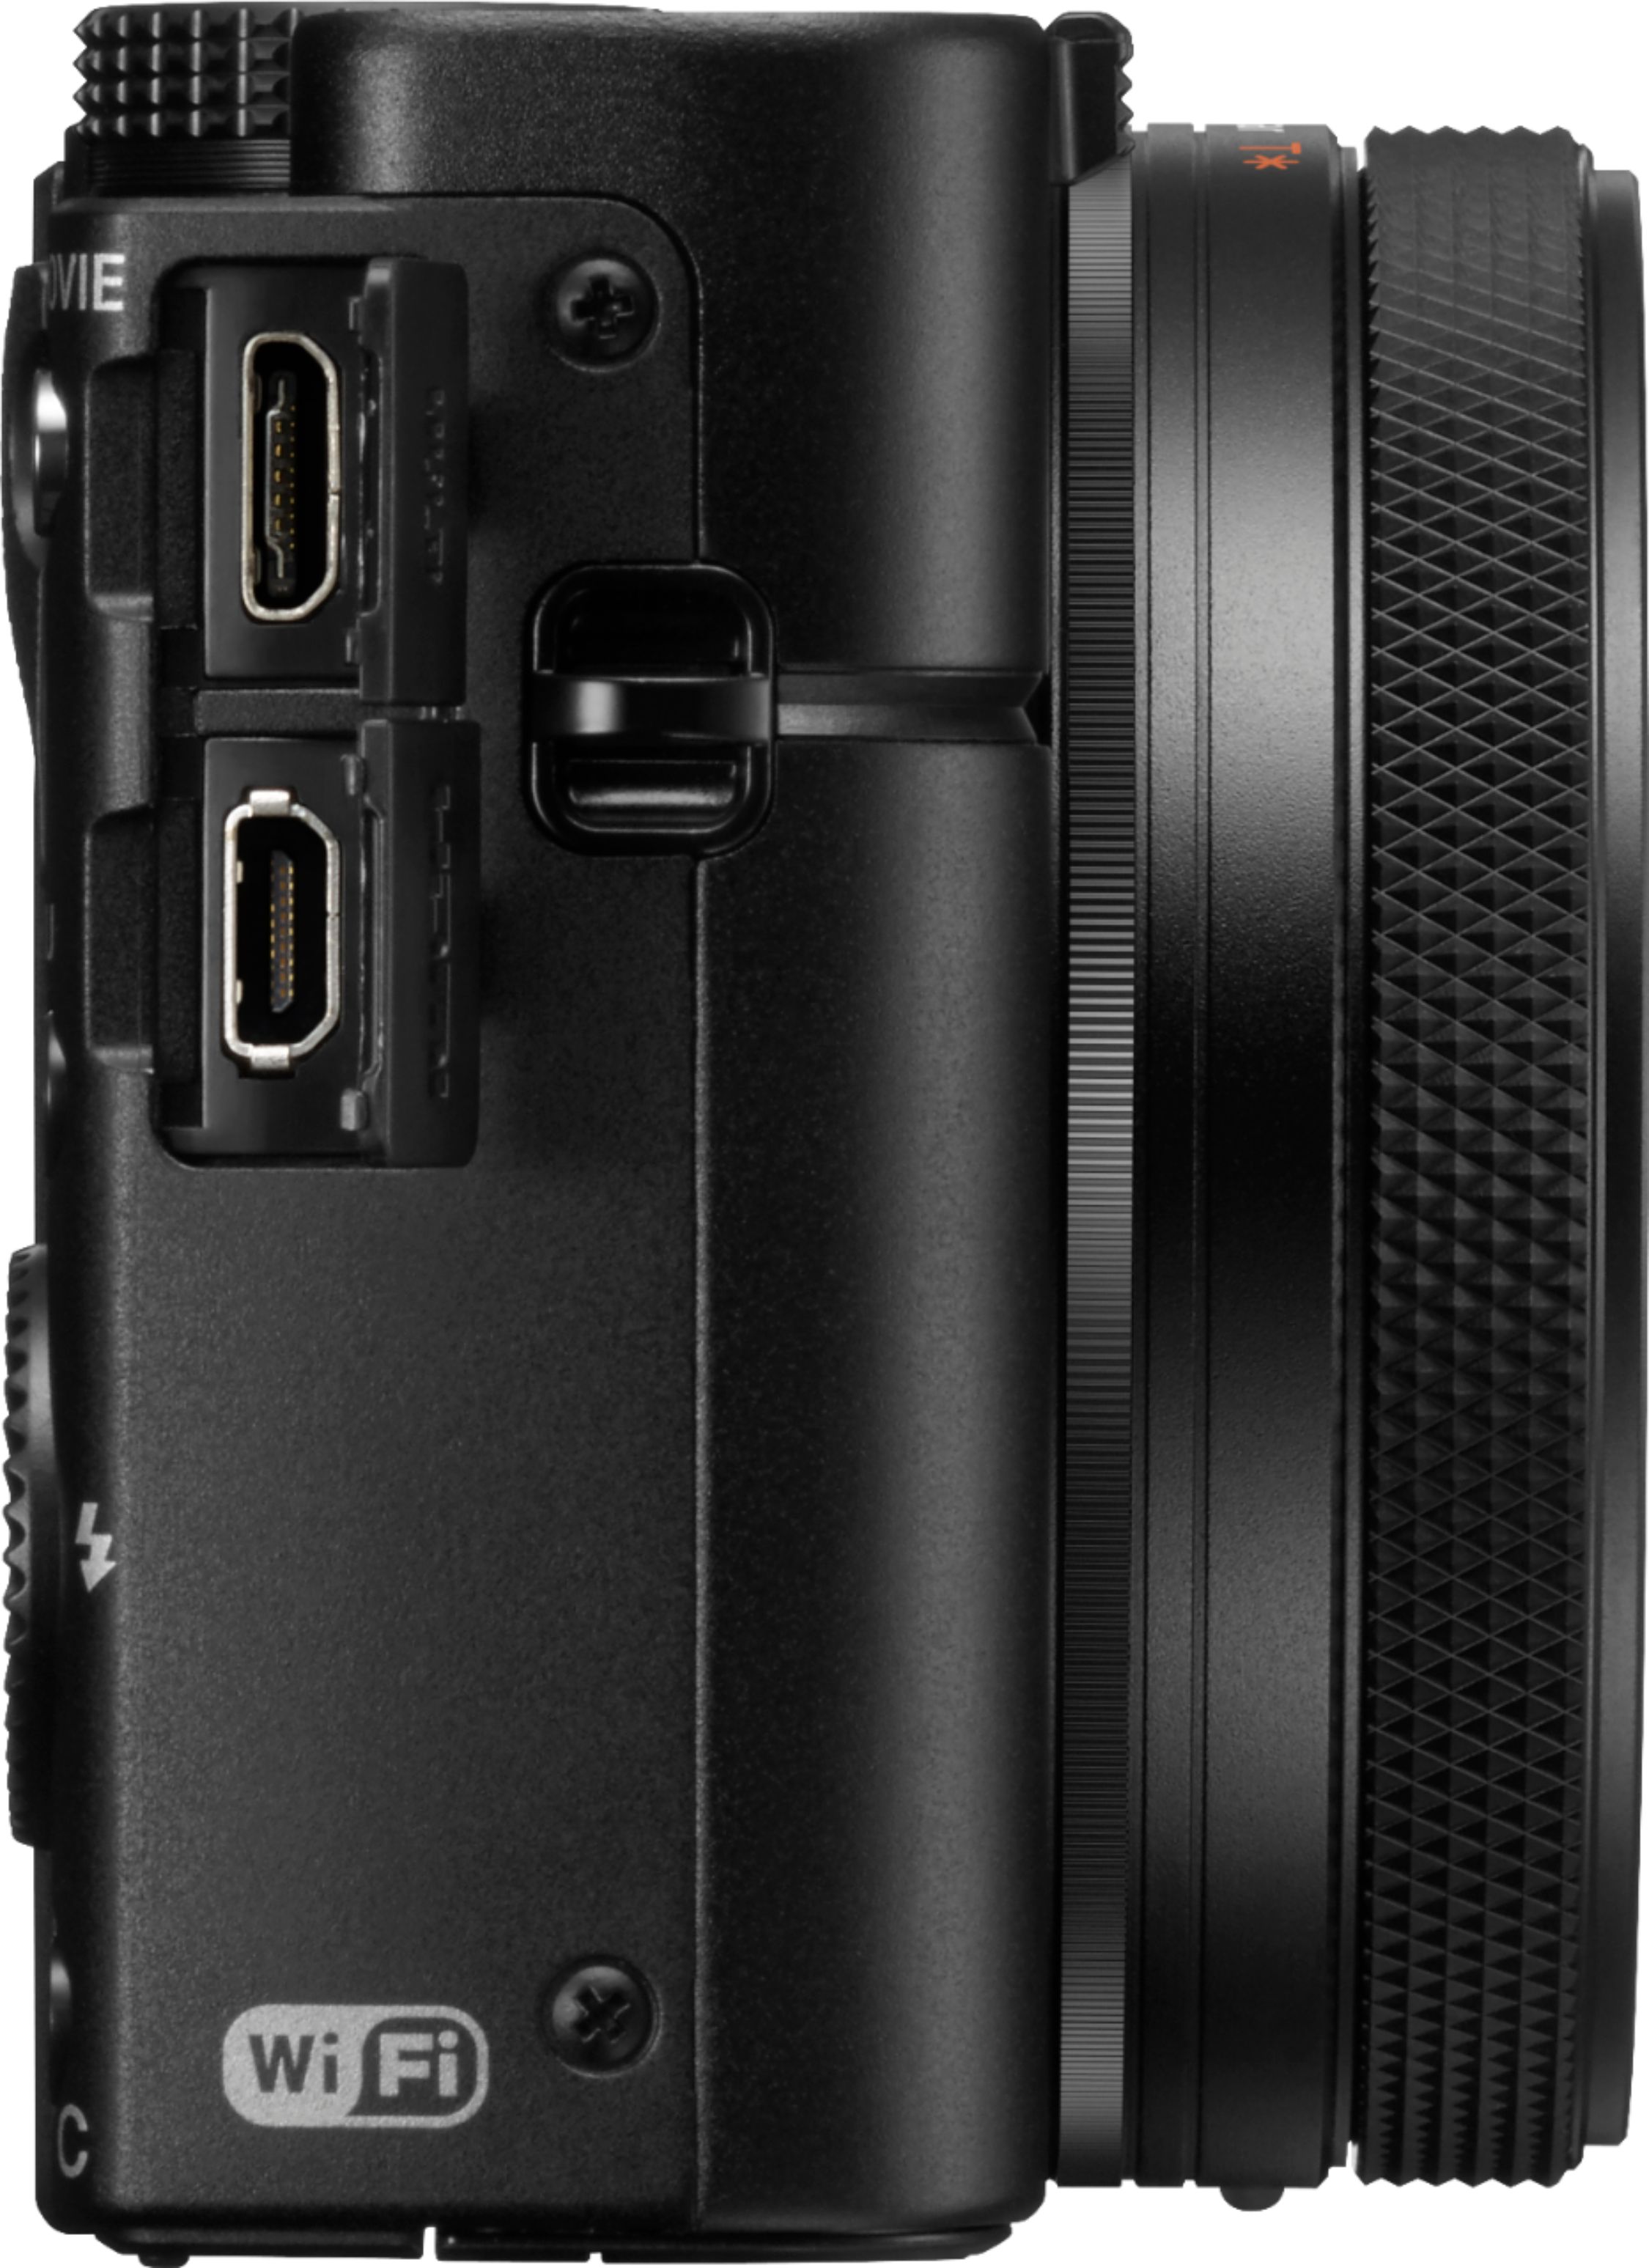 Sony Cyber-shot RX100 VI 21.0-Megapixel Digital Camera Black